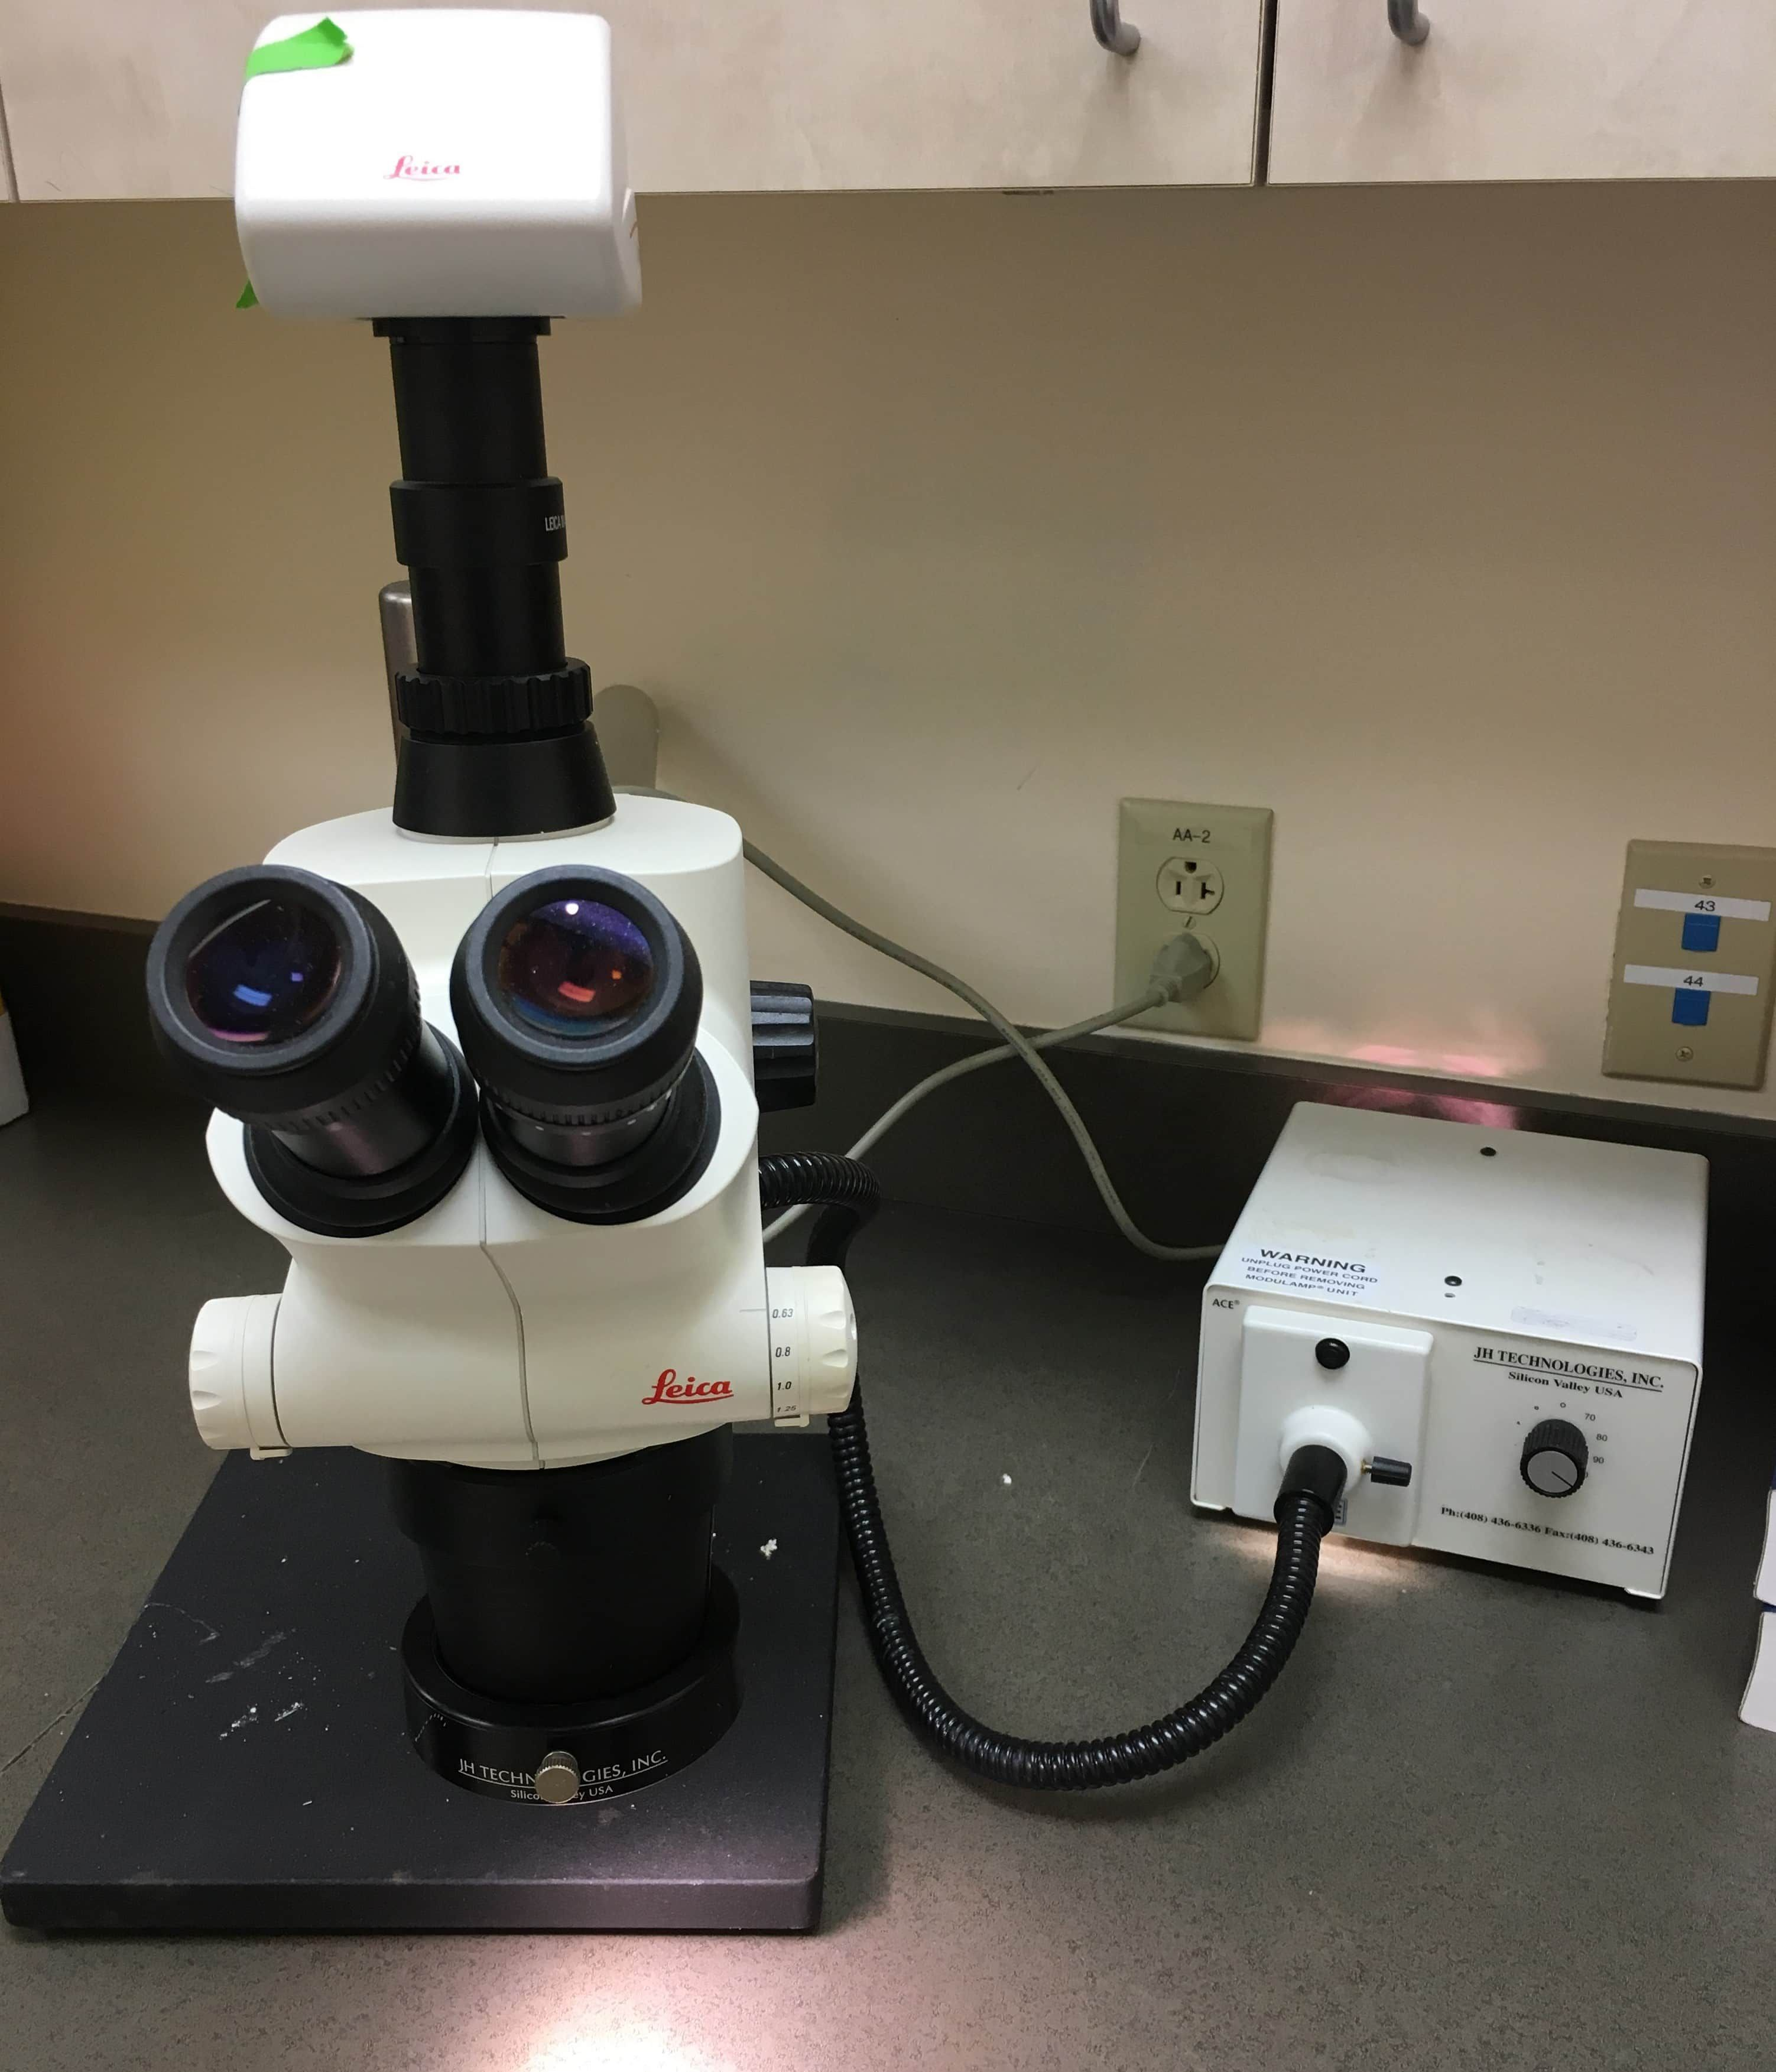 Leica S6D Microscope - still in lab